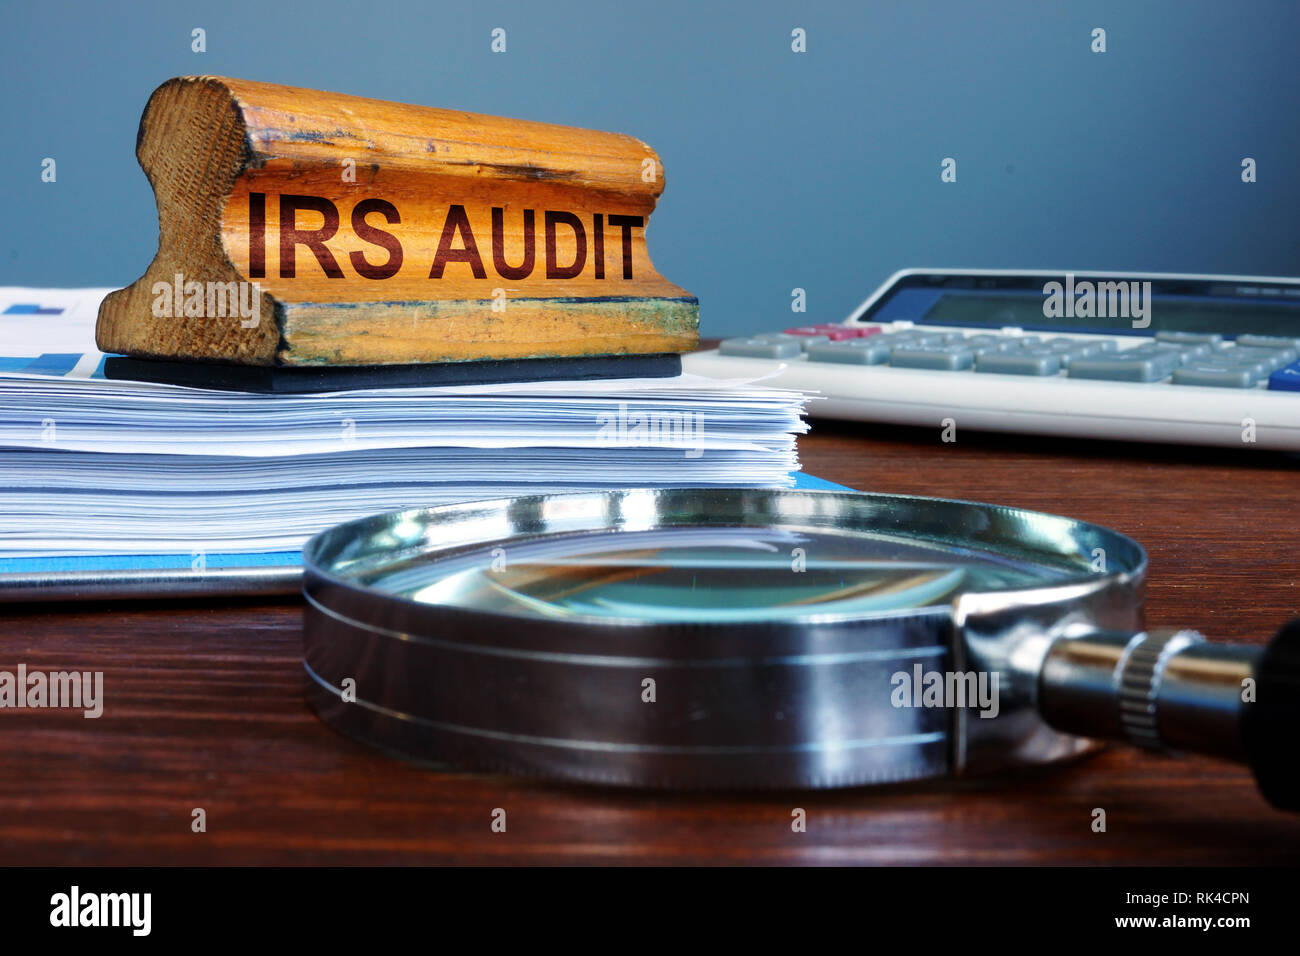 Stempel IRS audit und accounting Dokumente. Stockfoto